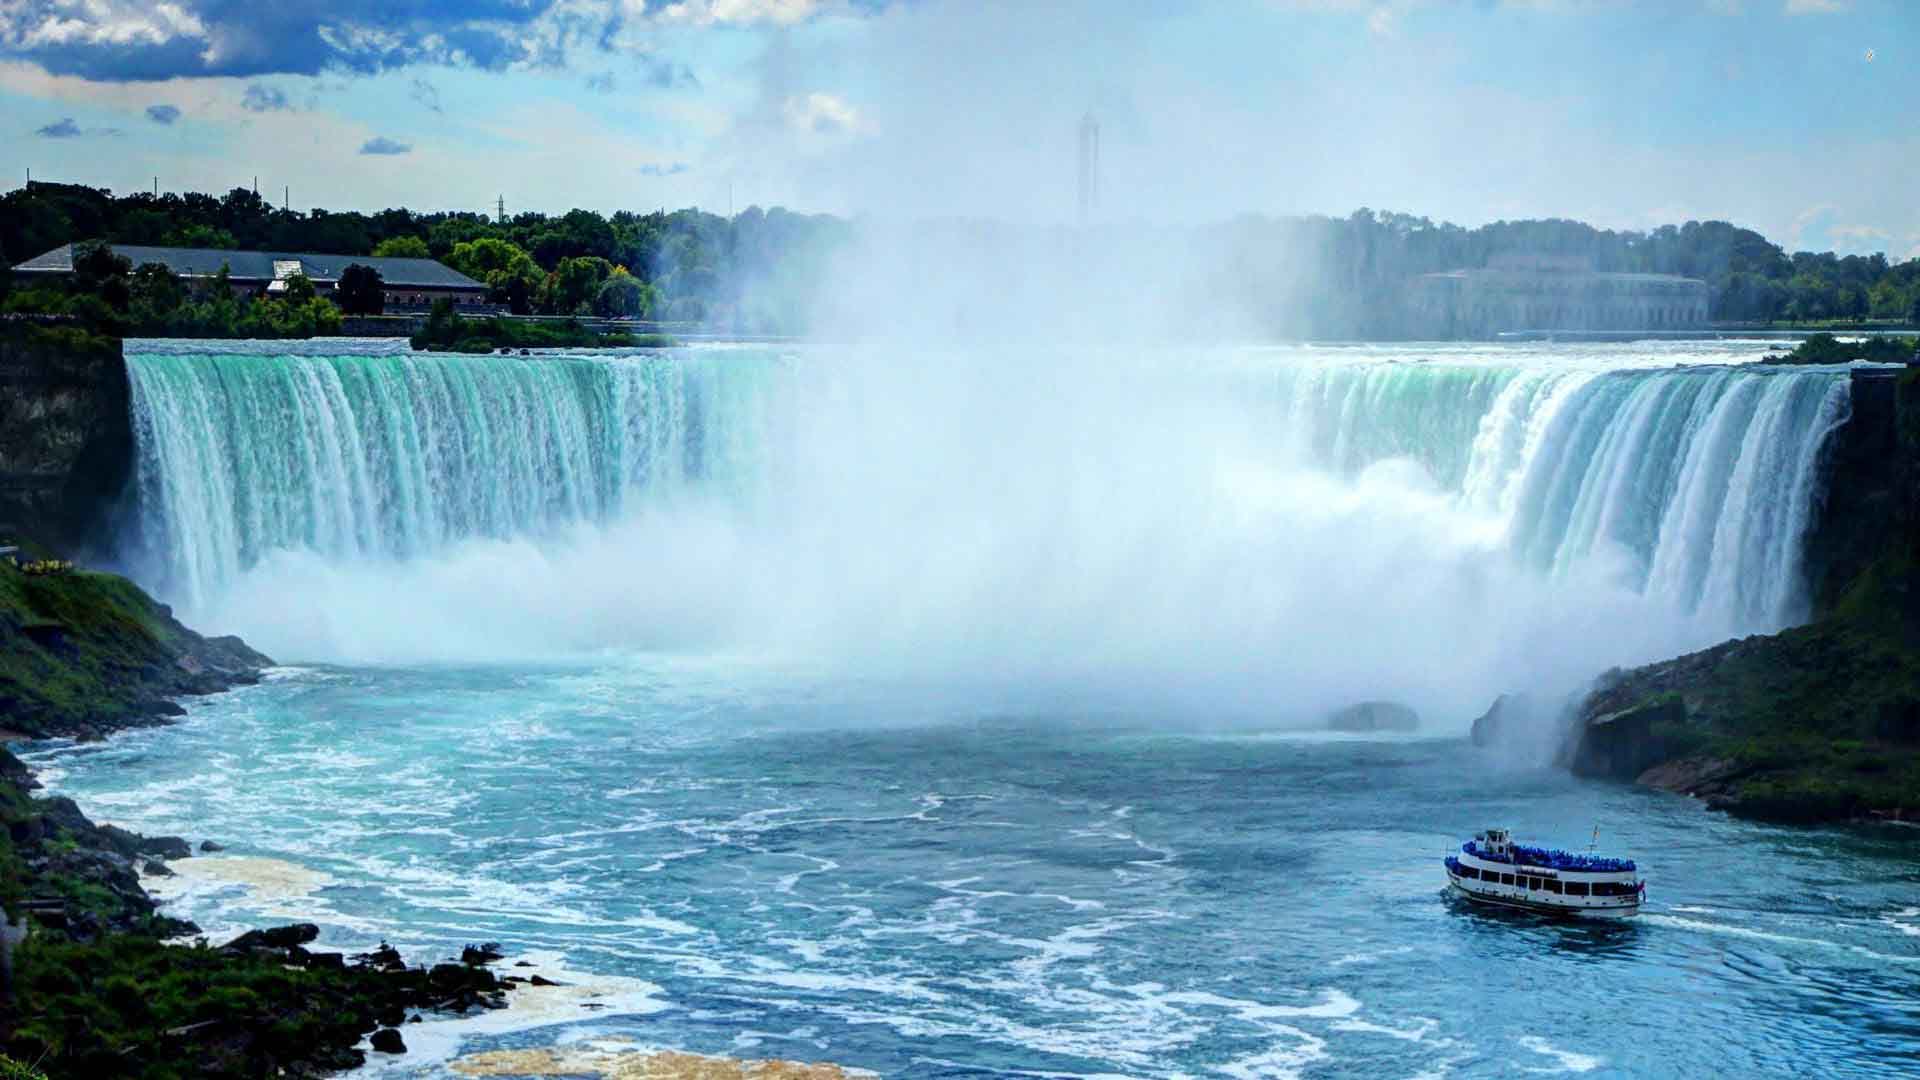 Niagara Falls Canadas Best Wonder Of The World Found The World